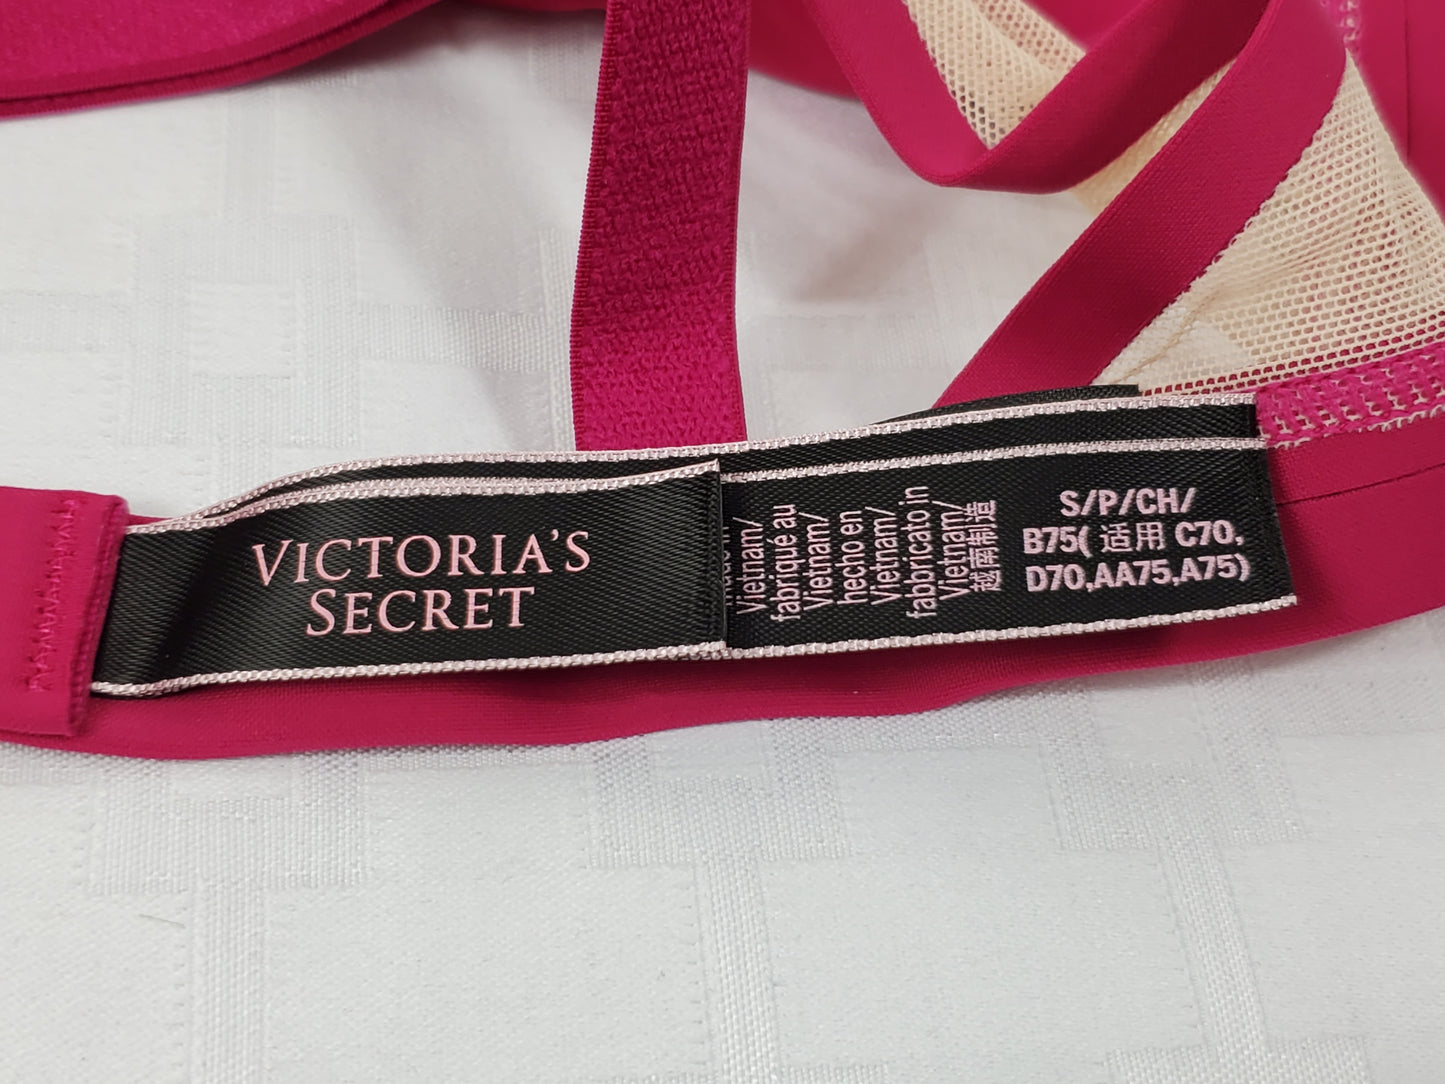 Victoria's Secret Bralette in Hot Pink Size Small